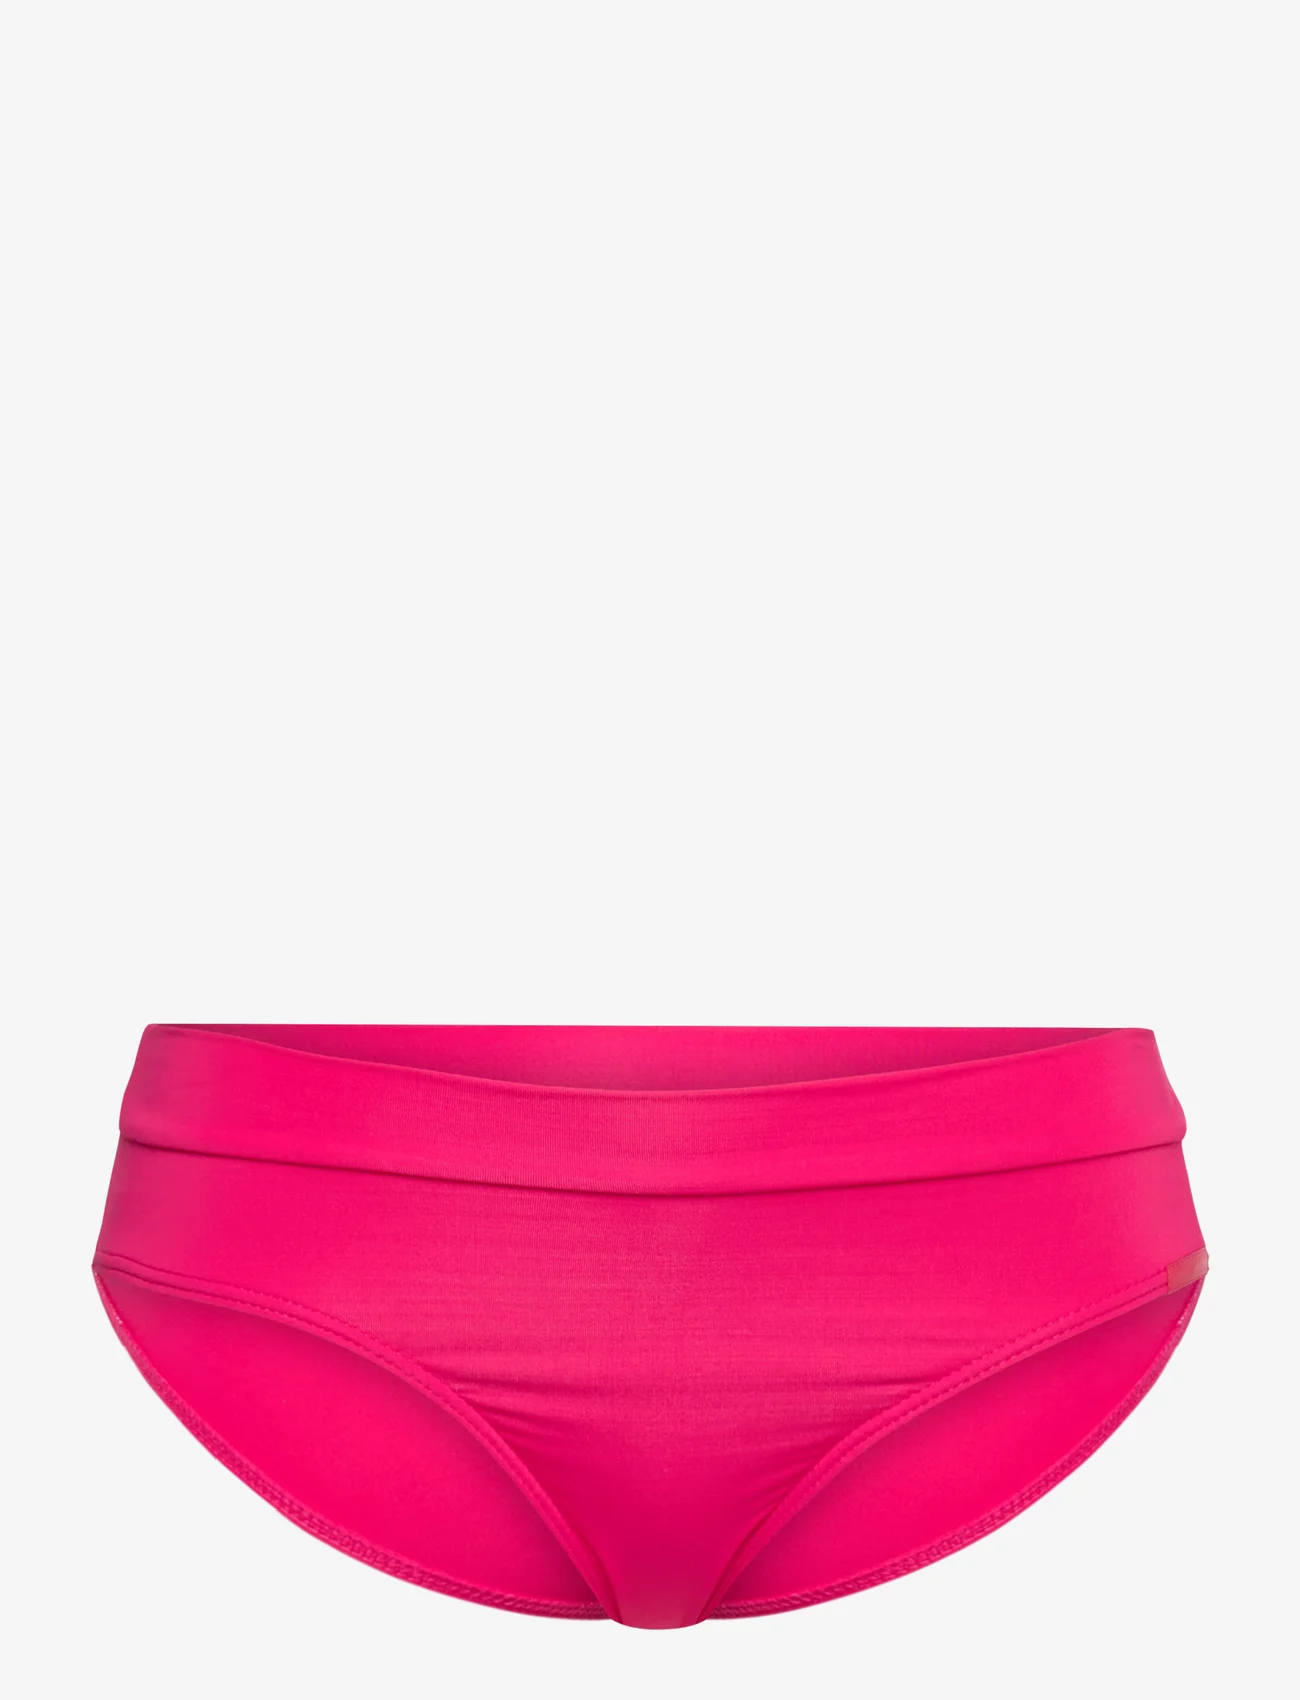 Panos Emporio - PANOS EMPORIO ATHENA-10 BTM - bikini briefs - pink - 0